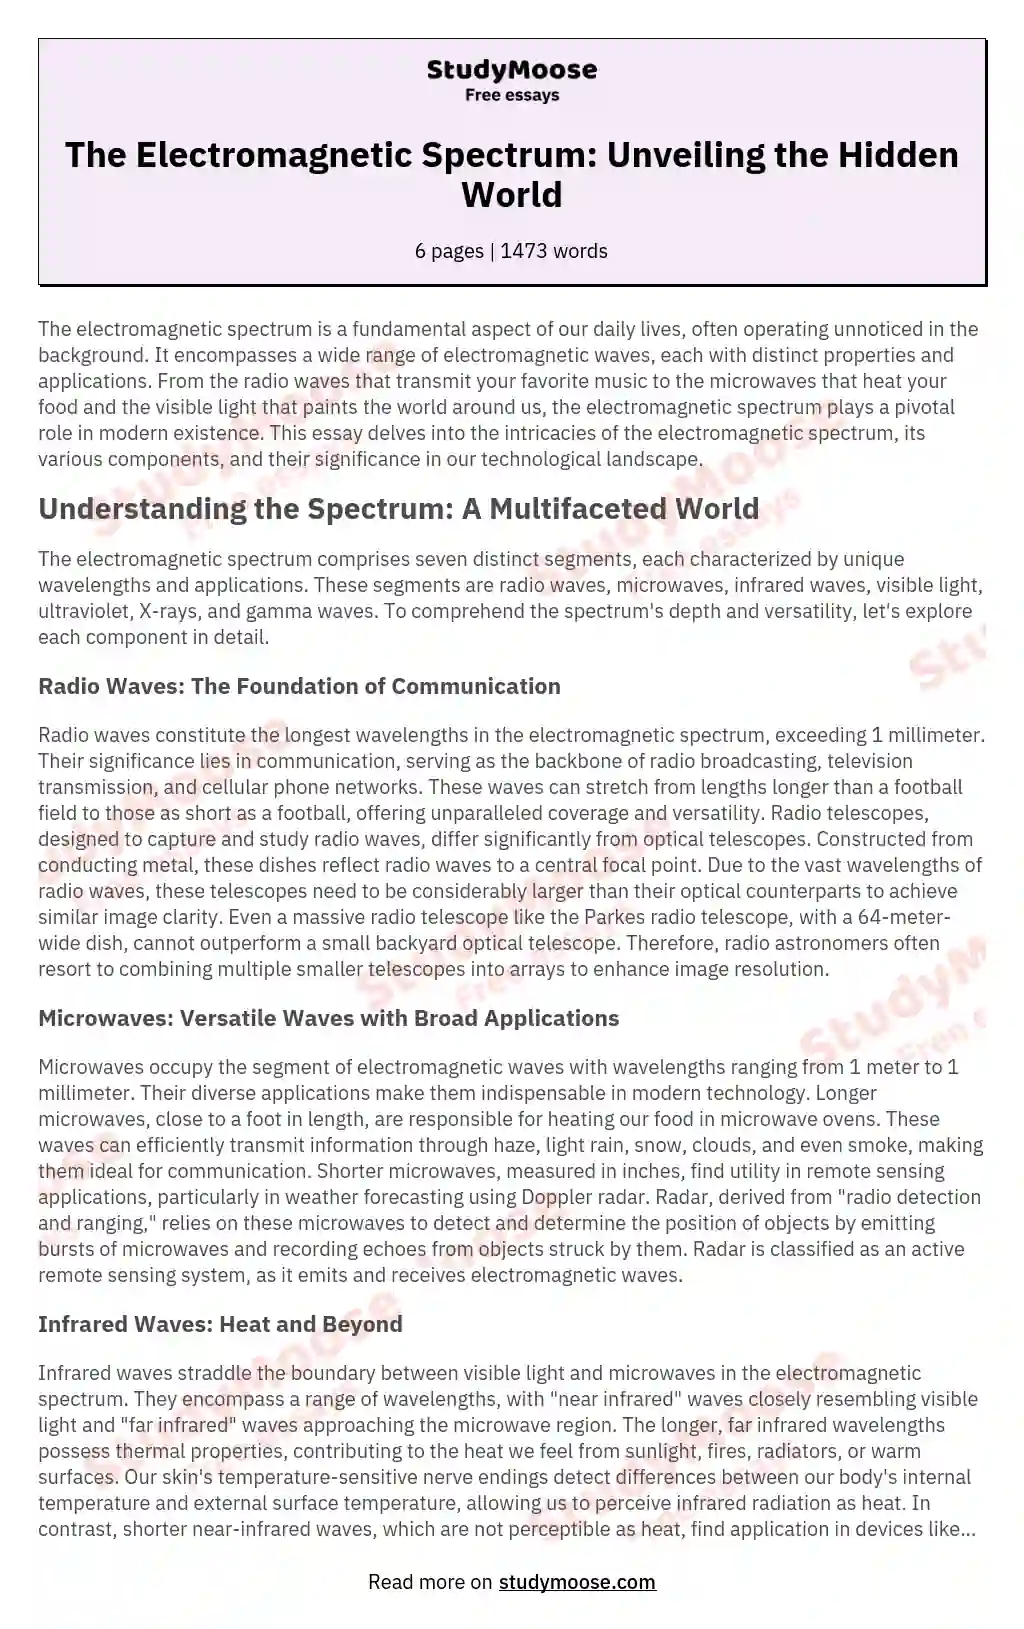 The Electromagnetic Spectrum: Unveiling the Hidden World essay